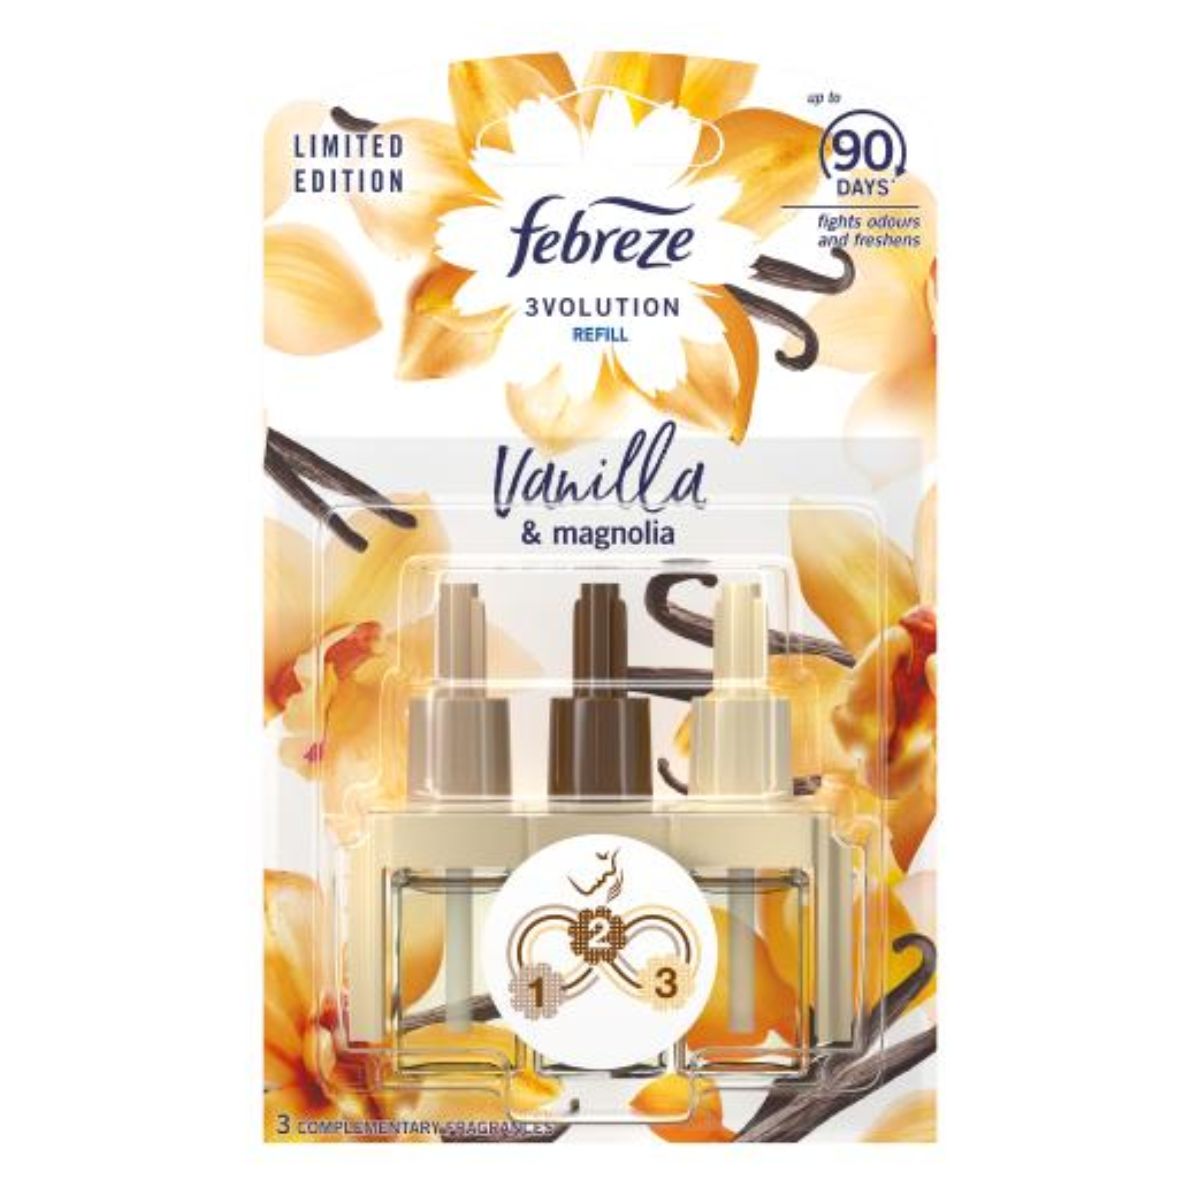 A package of Febreze - 3Volution Air Freshener Plug In Refill Vanilla & Magnolia - 20ml scents.